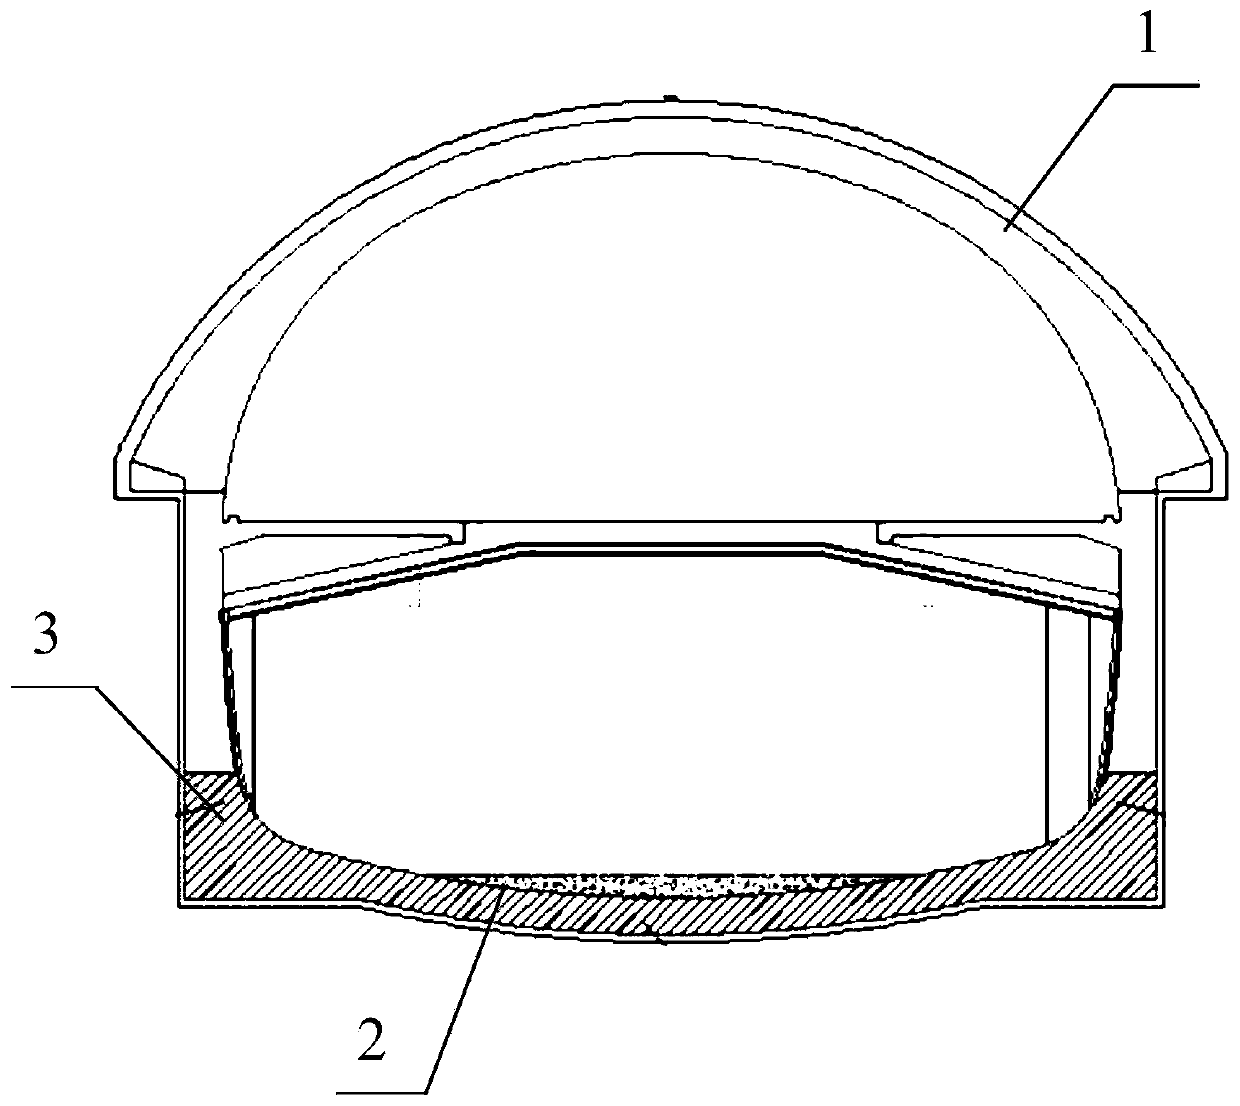 Underground excavation station arch bridge type arc-shaped middle plate construction method